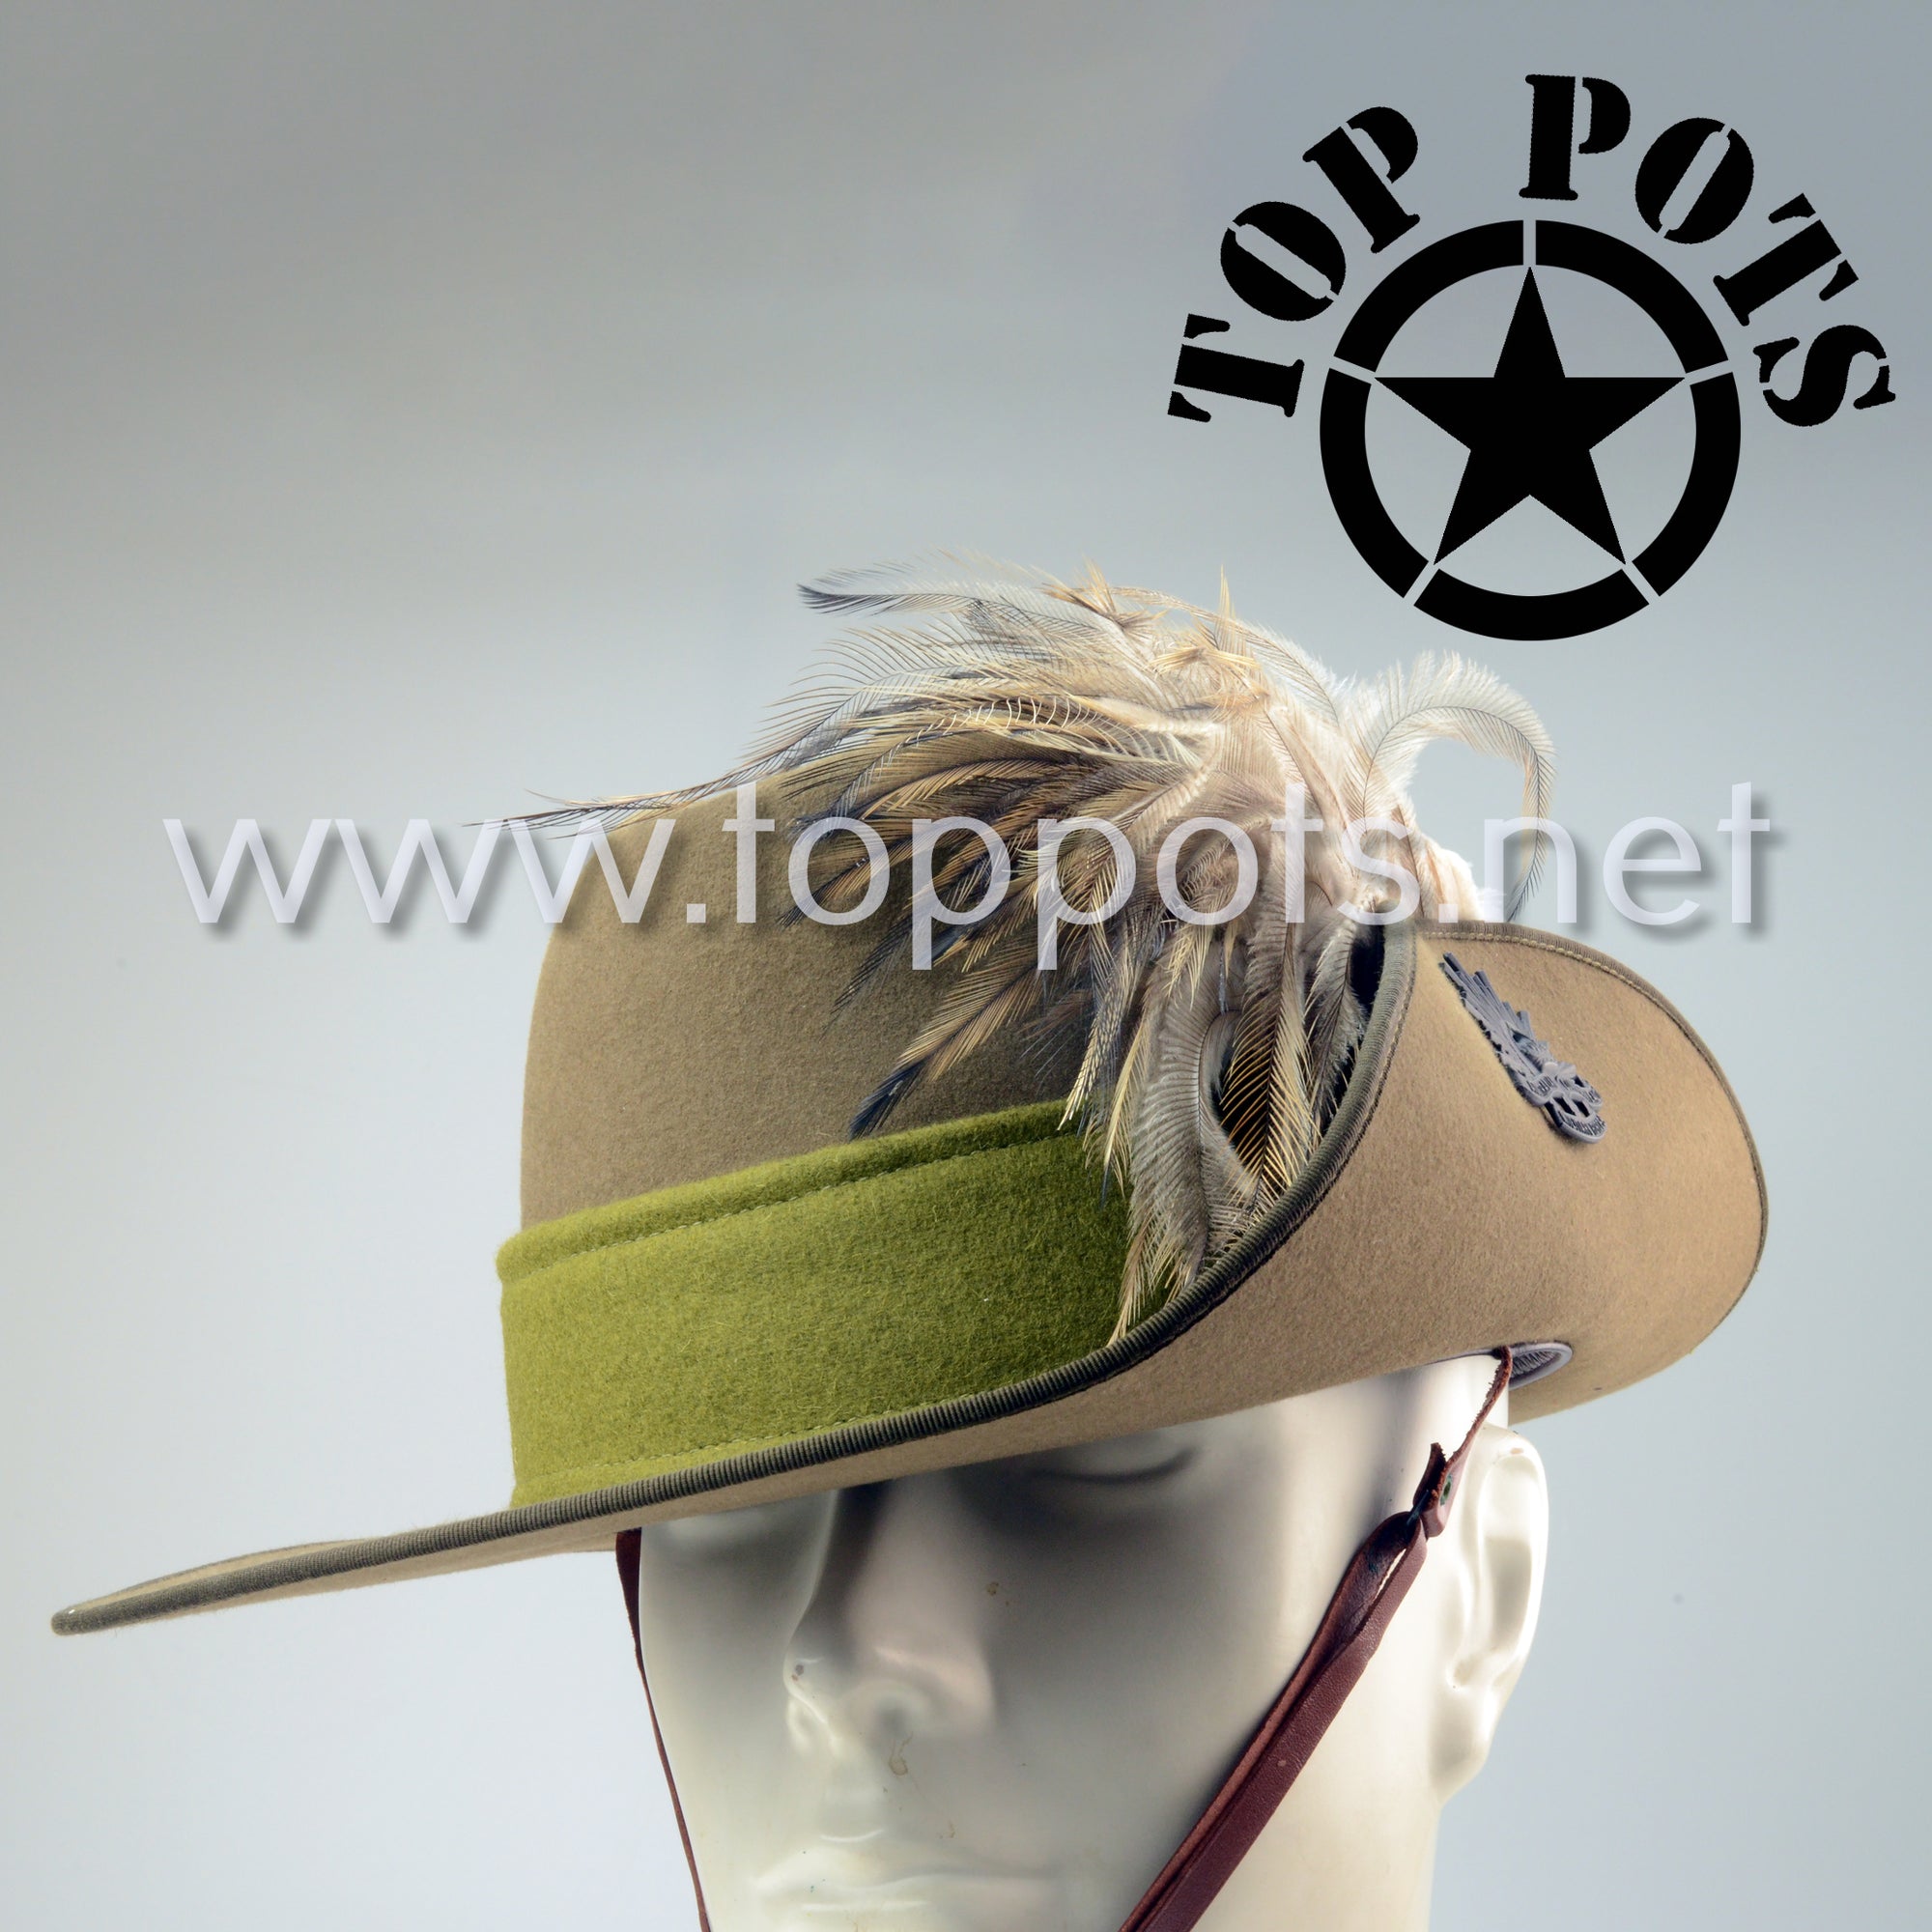 Featured Uniform - Reproduction WWI ANZAC Australian Light Horse Uniform Slouch Hat (Hat Only)